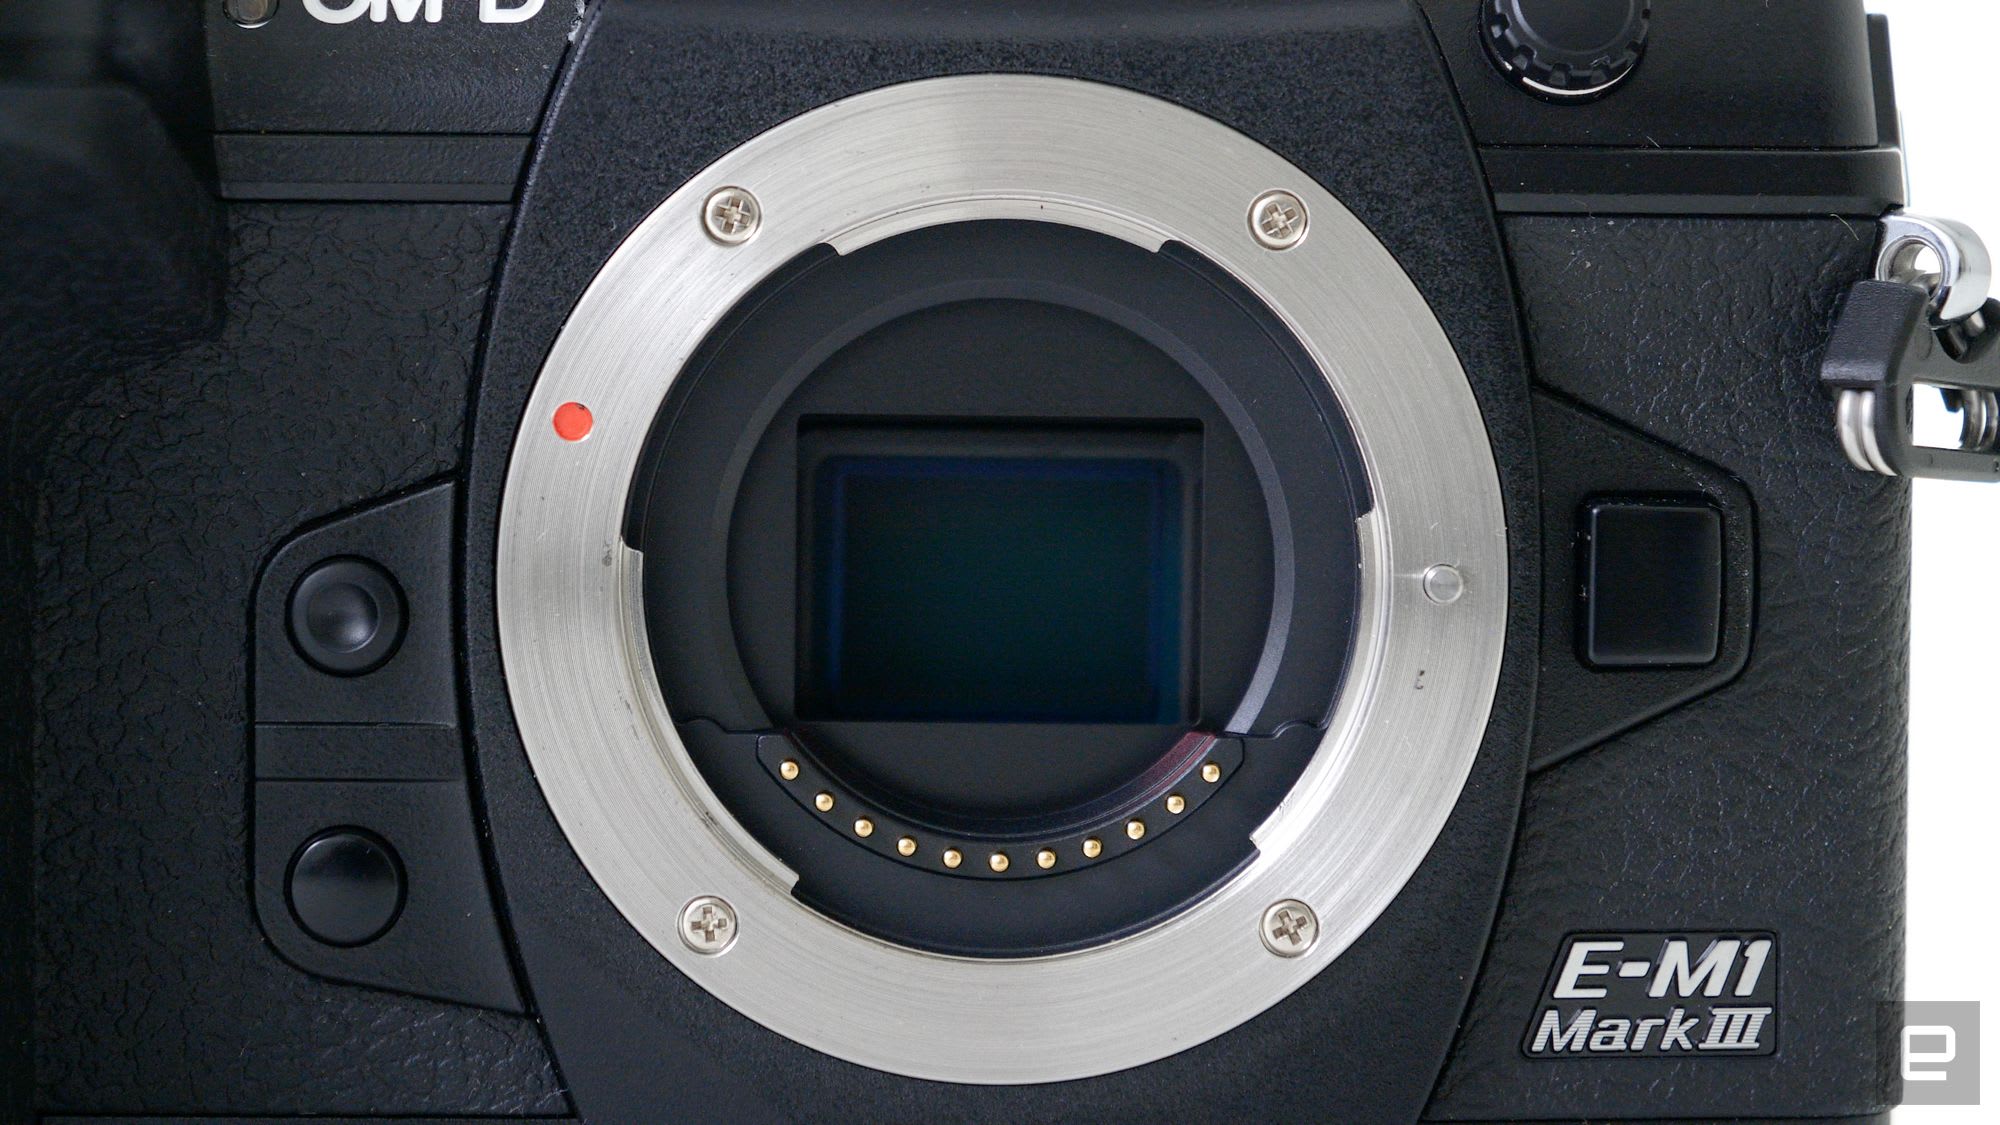 Olympus O-MD E-M1 Mark III Micro Four Thirds mirrorless camera